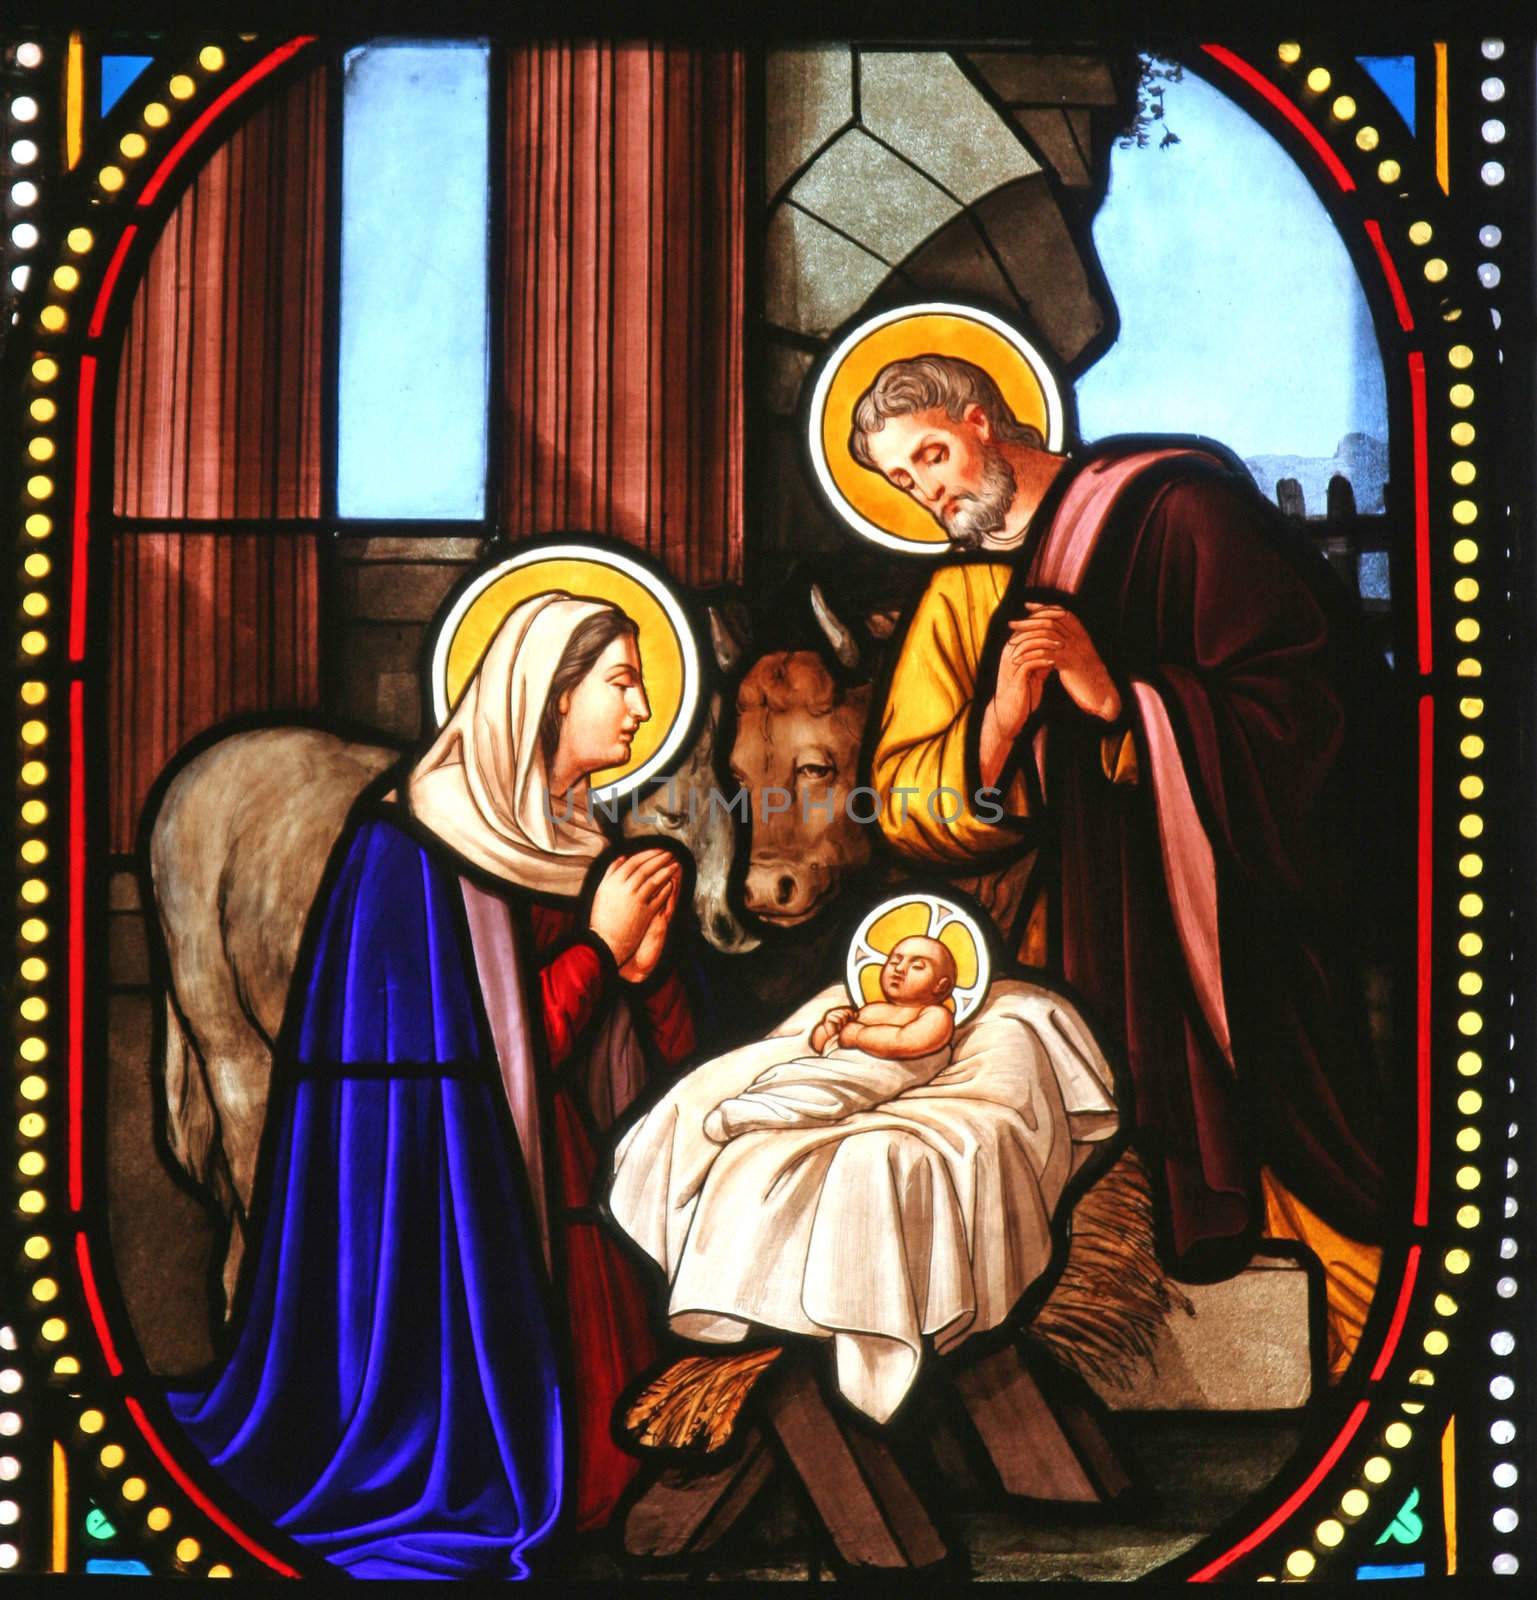 Nativity scene by atlas